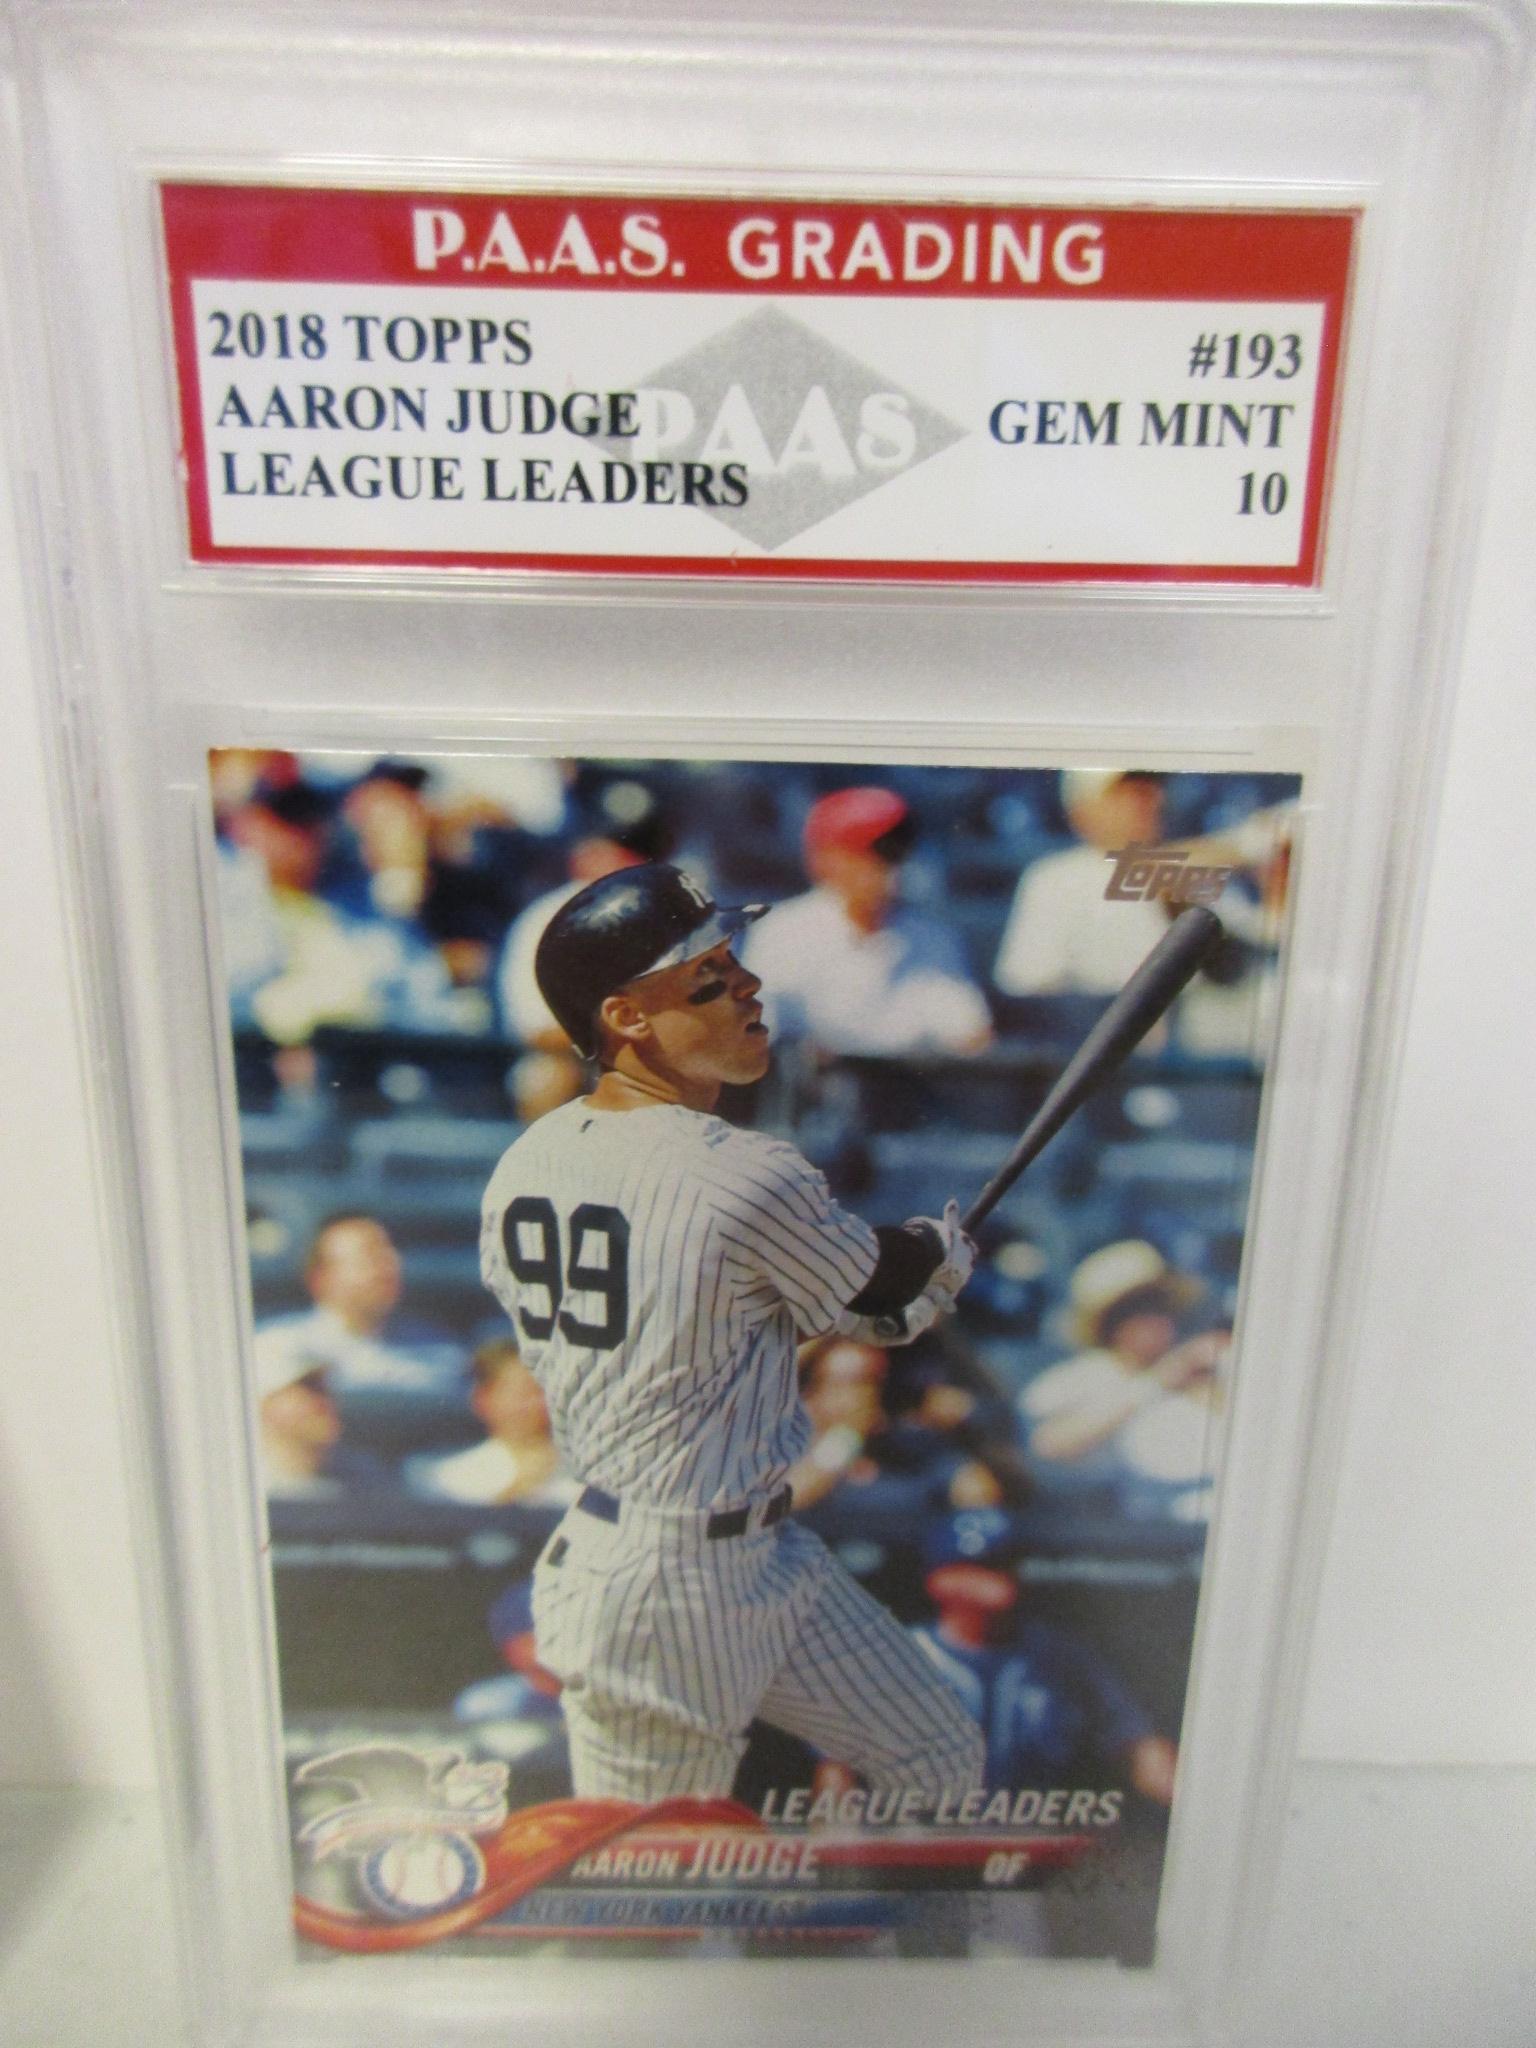 Aaron Judge NY Yankees 2018 Topps League Leaders #193 graded PAAS Gem Mint 10